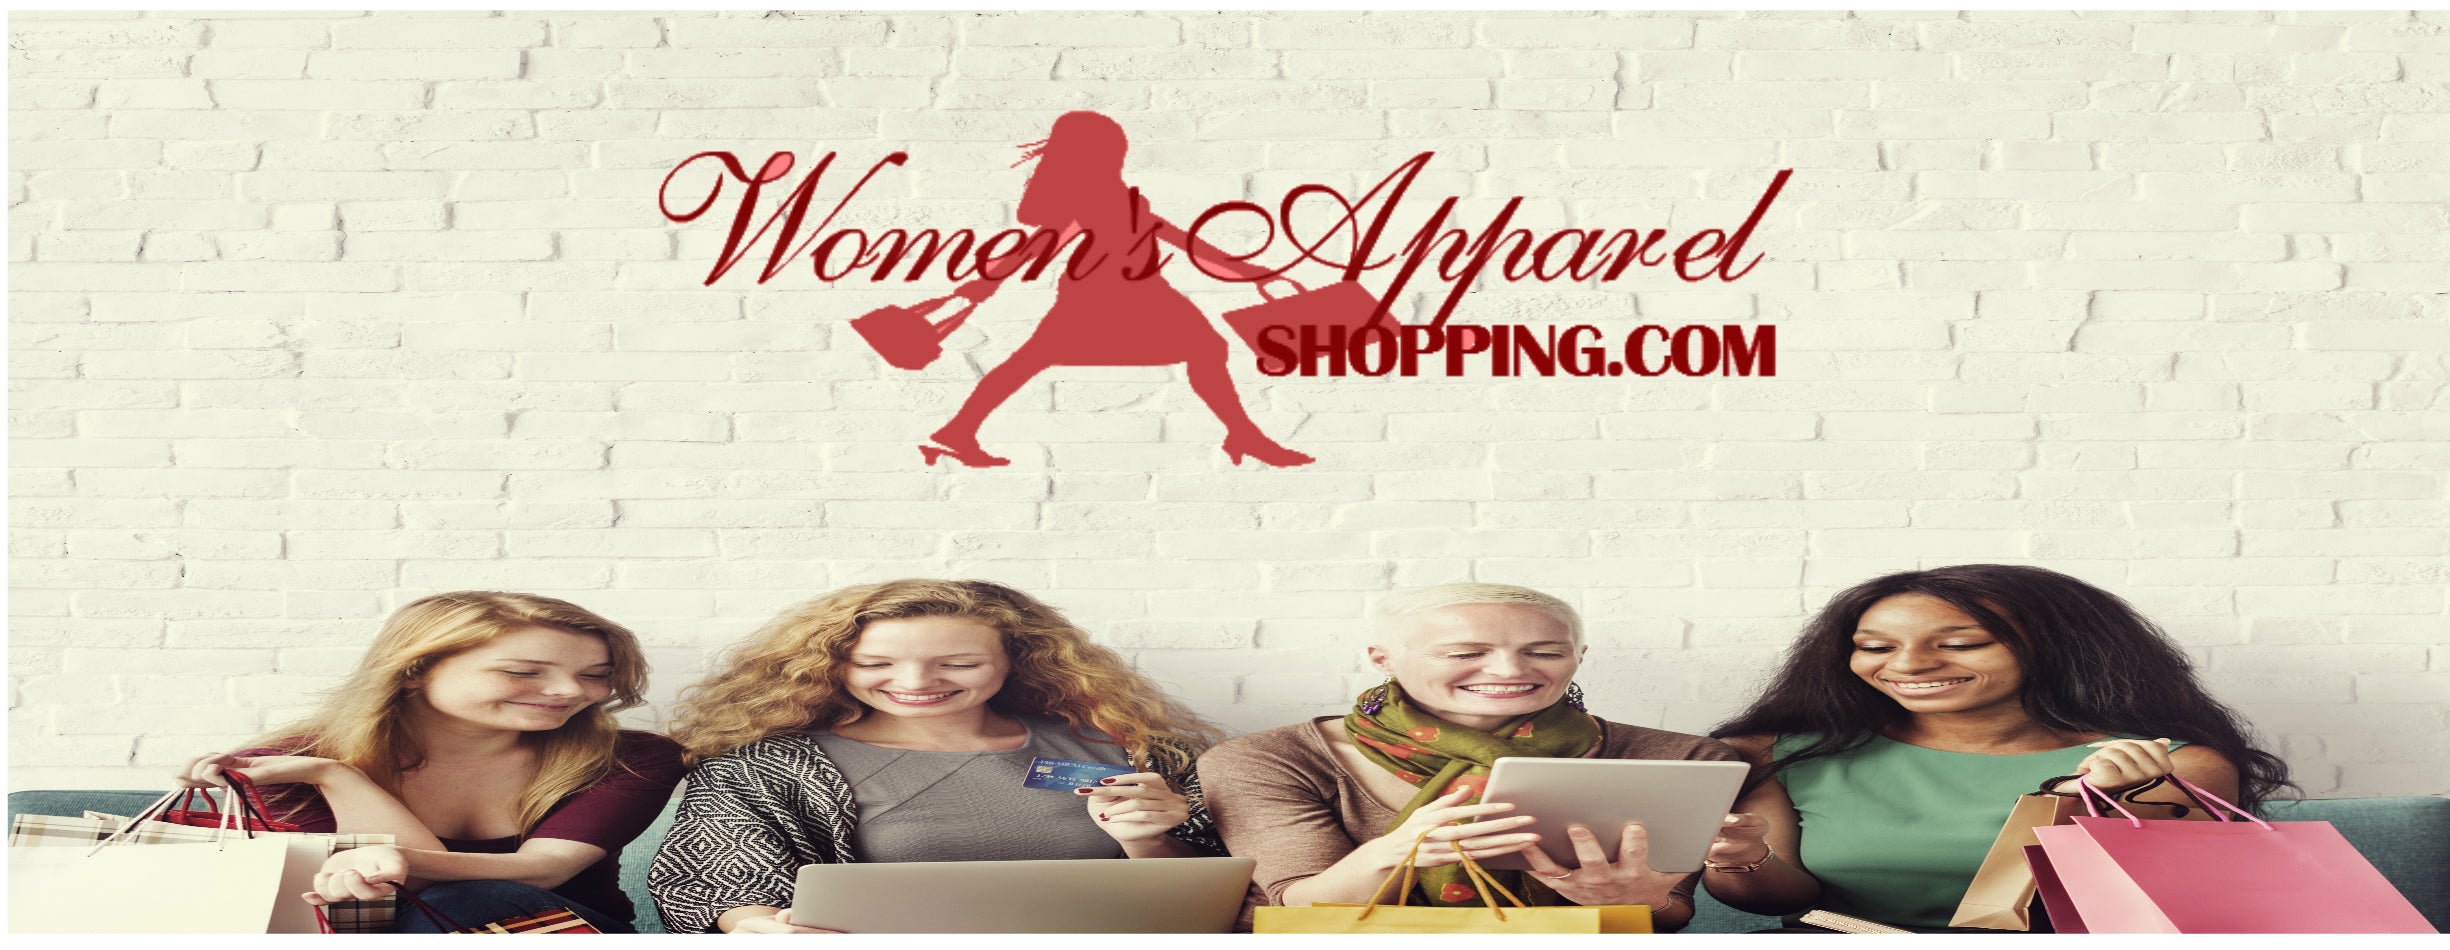 $100 - Women's Apparel Shopping (RED)